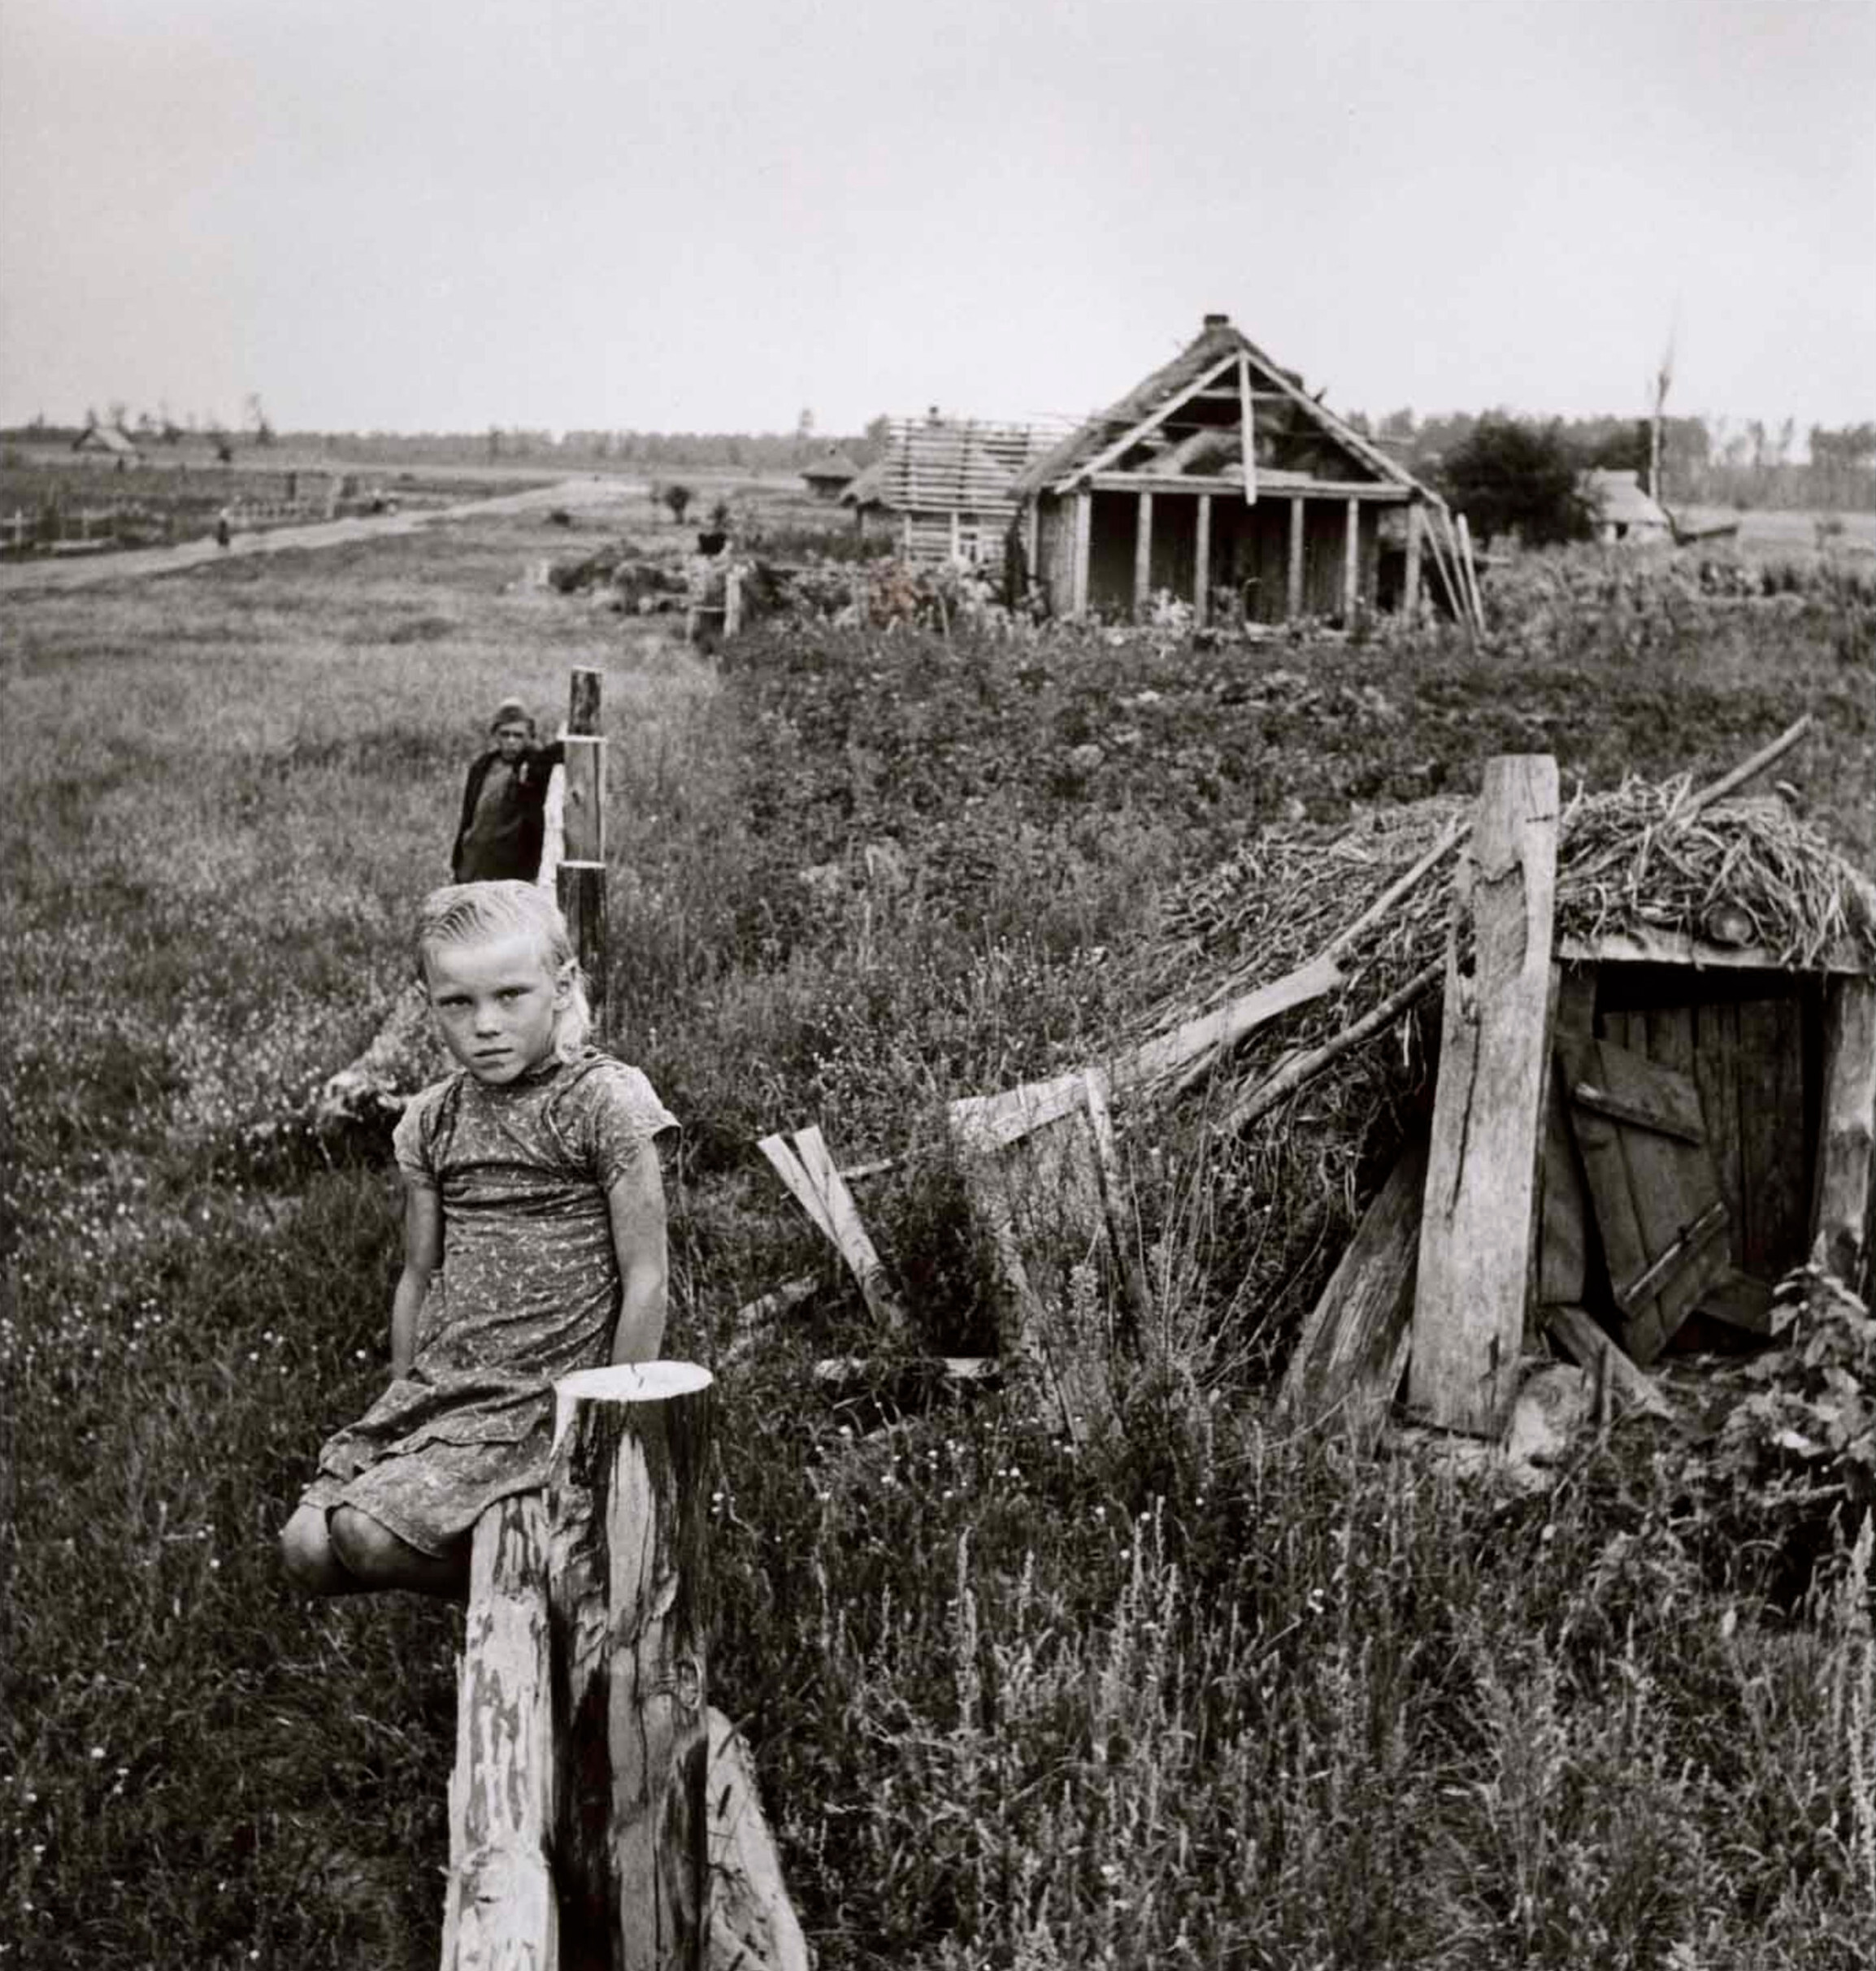 Девочка сидит на деревянном заборе в колхозе, Украина, август 1947 год. Фотограф Роберт Капа